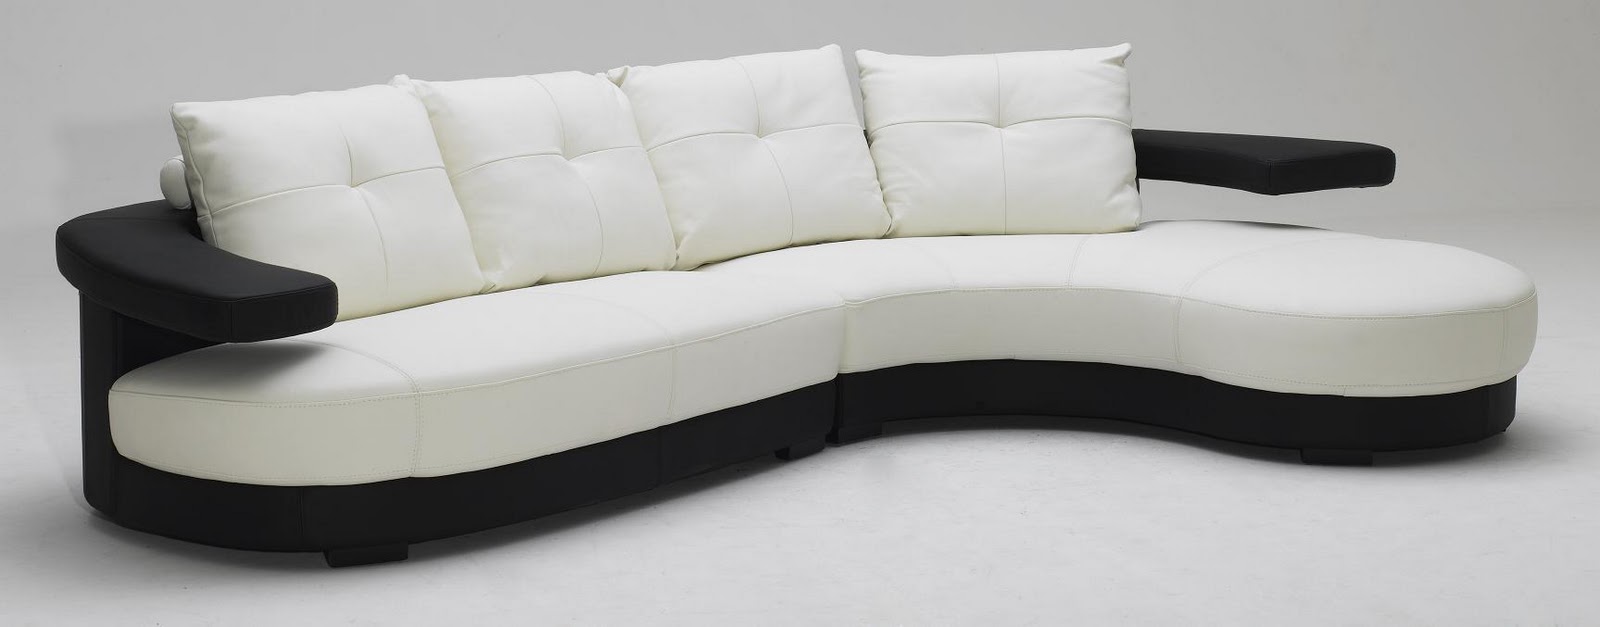 Modern Sofa Sets Designs 2012